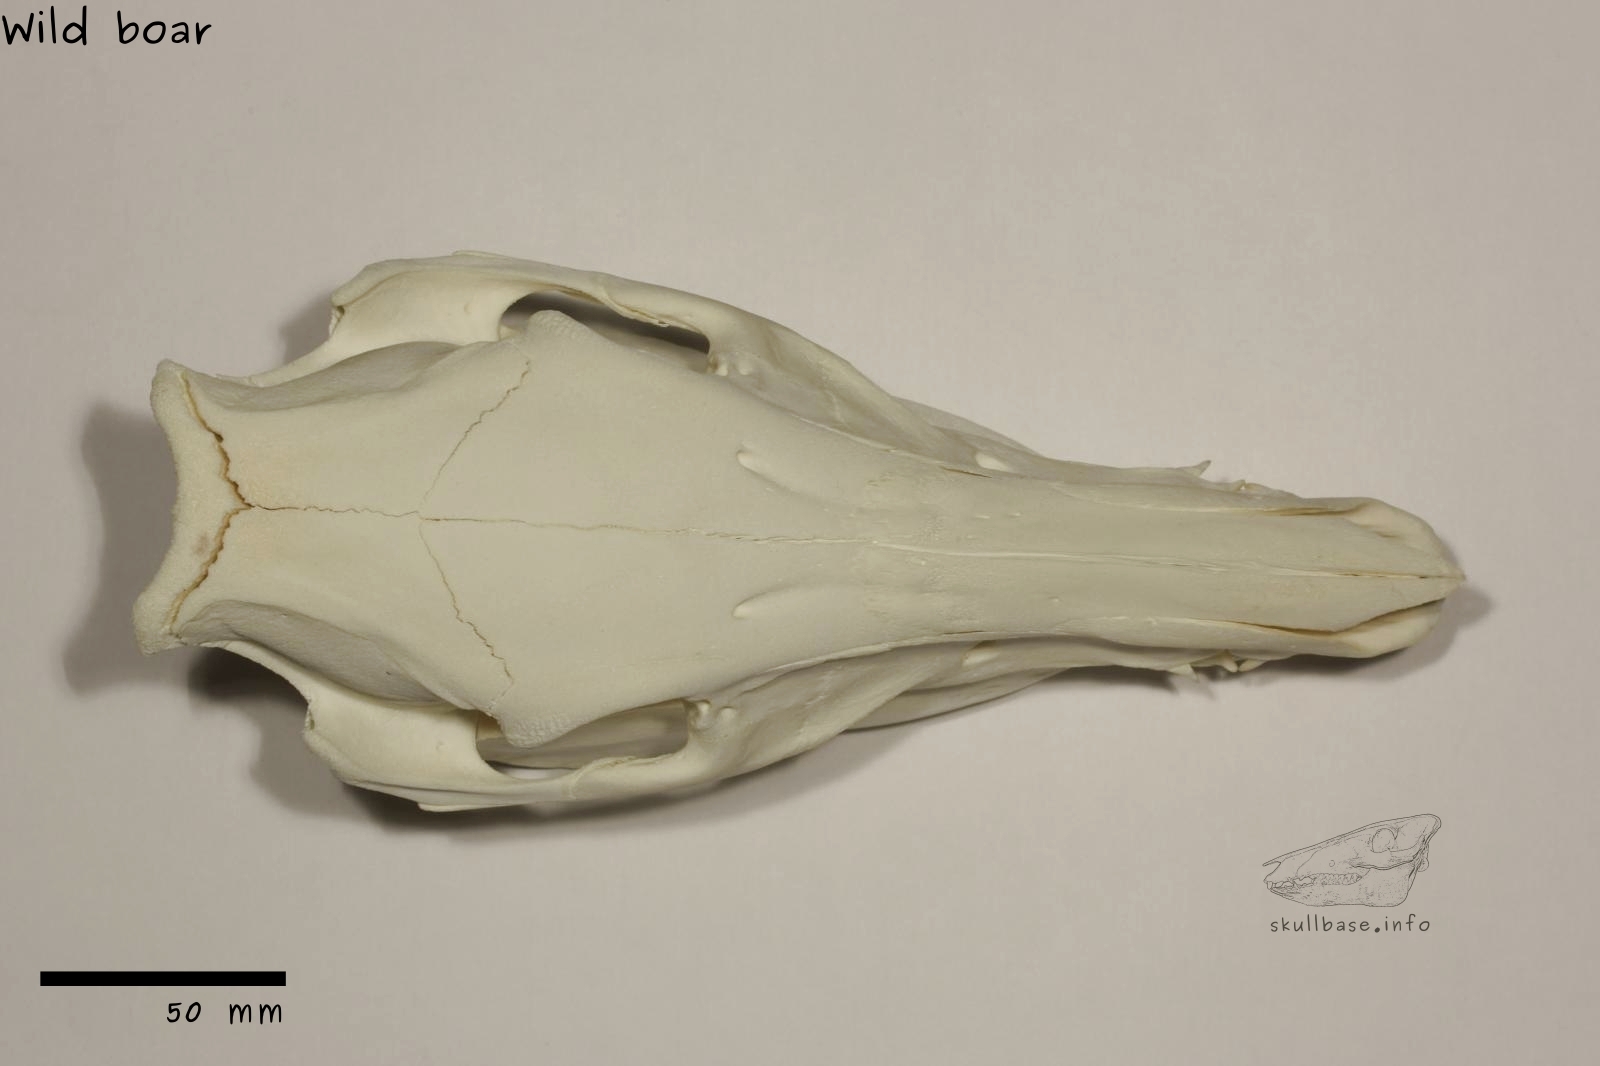 Wild boar (Sus scrofa) skull dorsal view